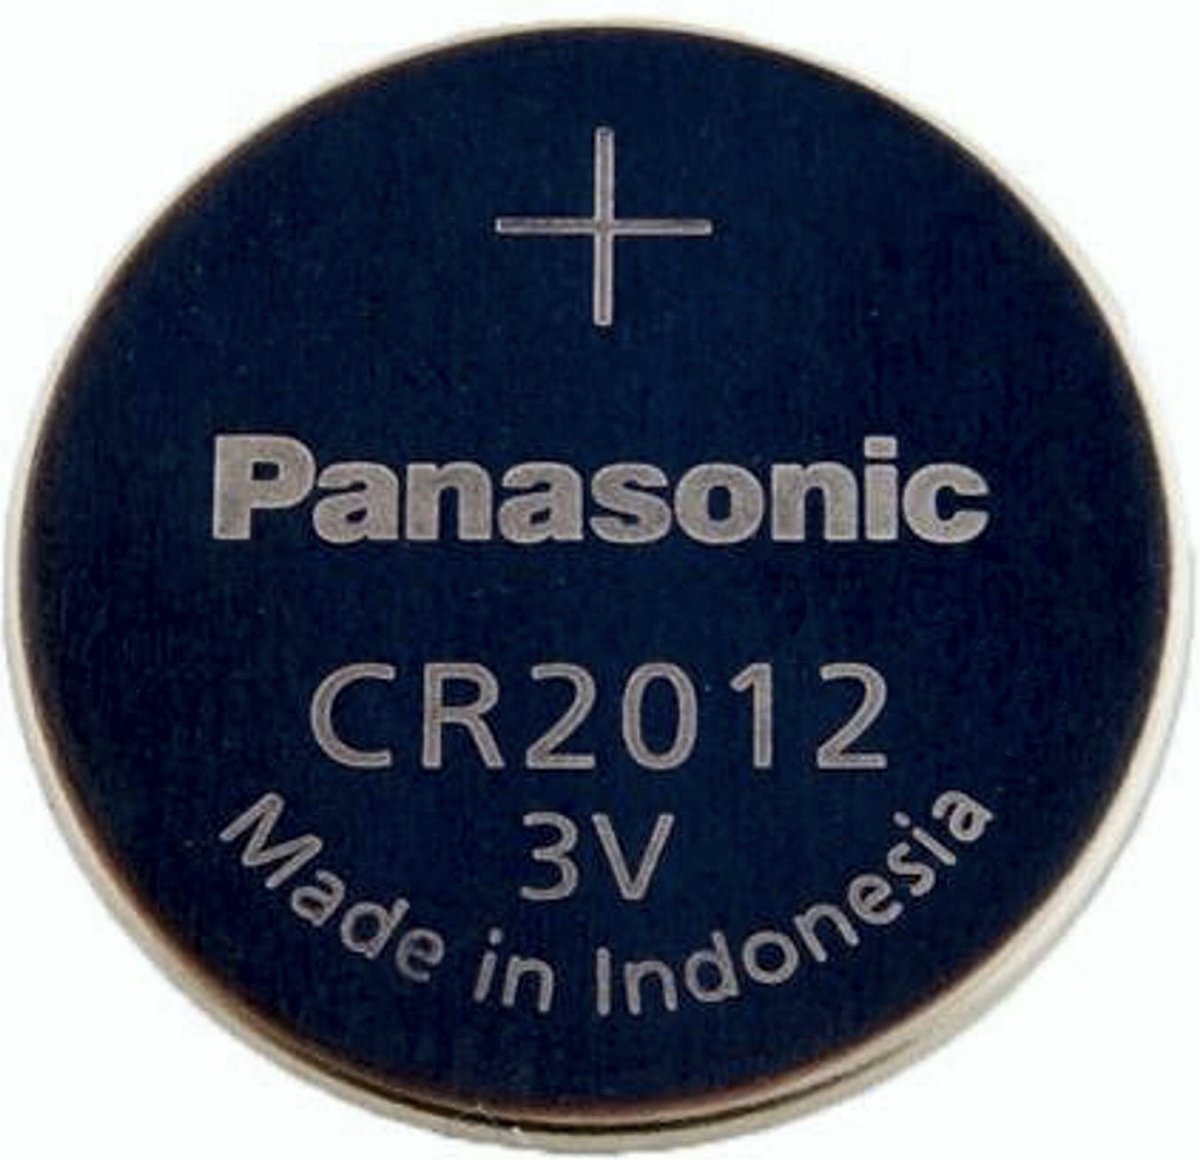 Maxell Lithium Batterij - Knoopcel - CR2012 - 2 stuks - 3V - Made in Indonesia - Japan - Panasonic